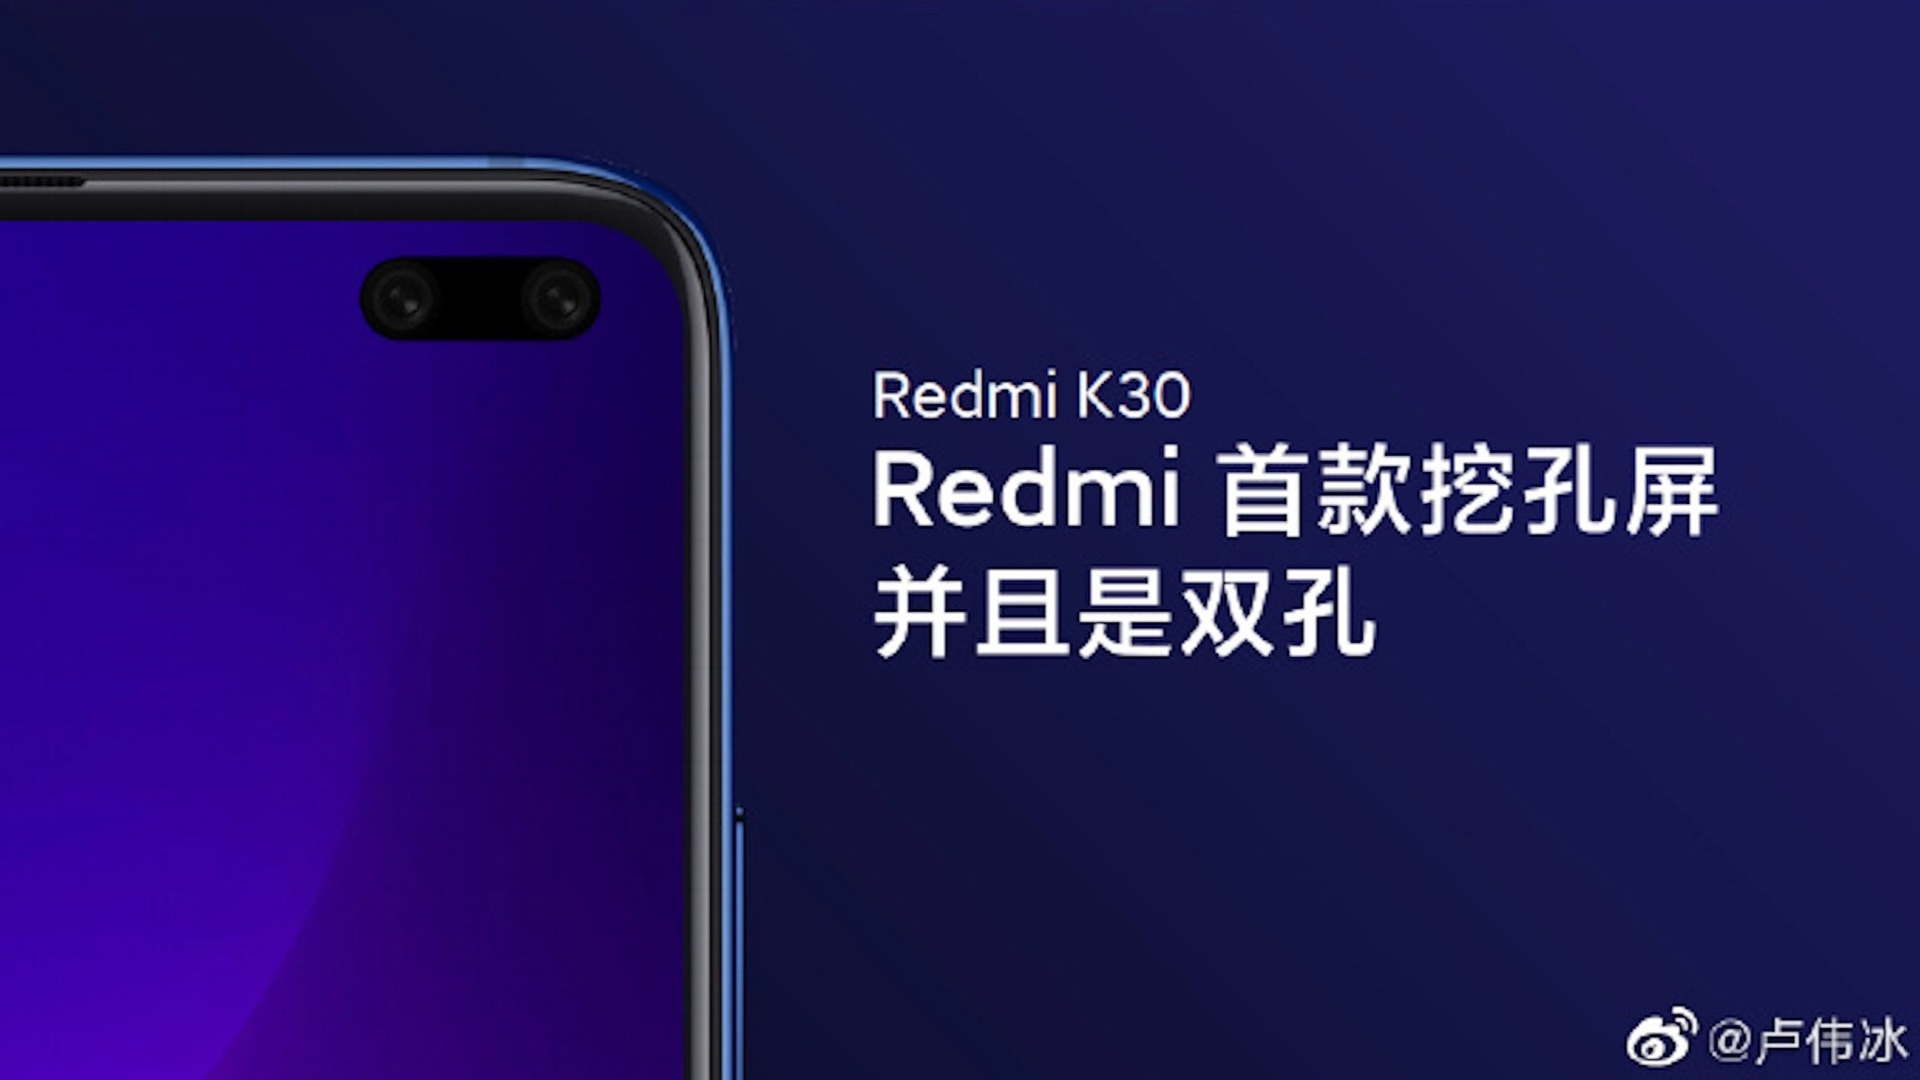 redmi k30 official teaser